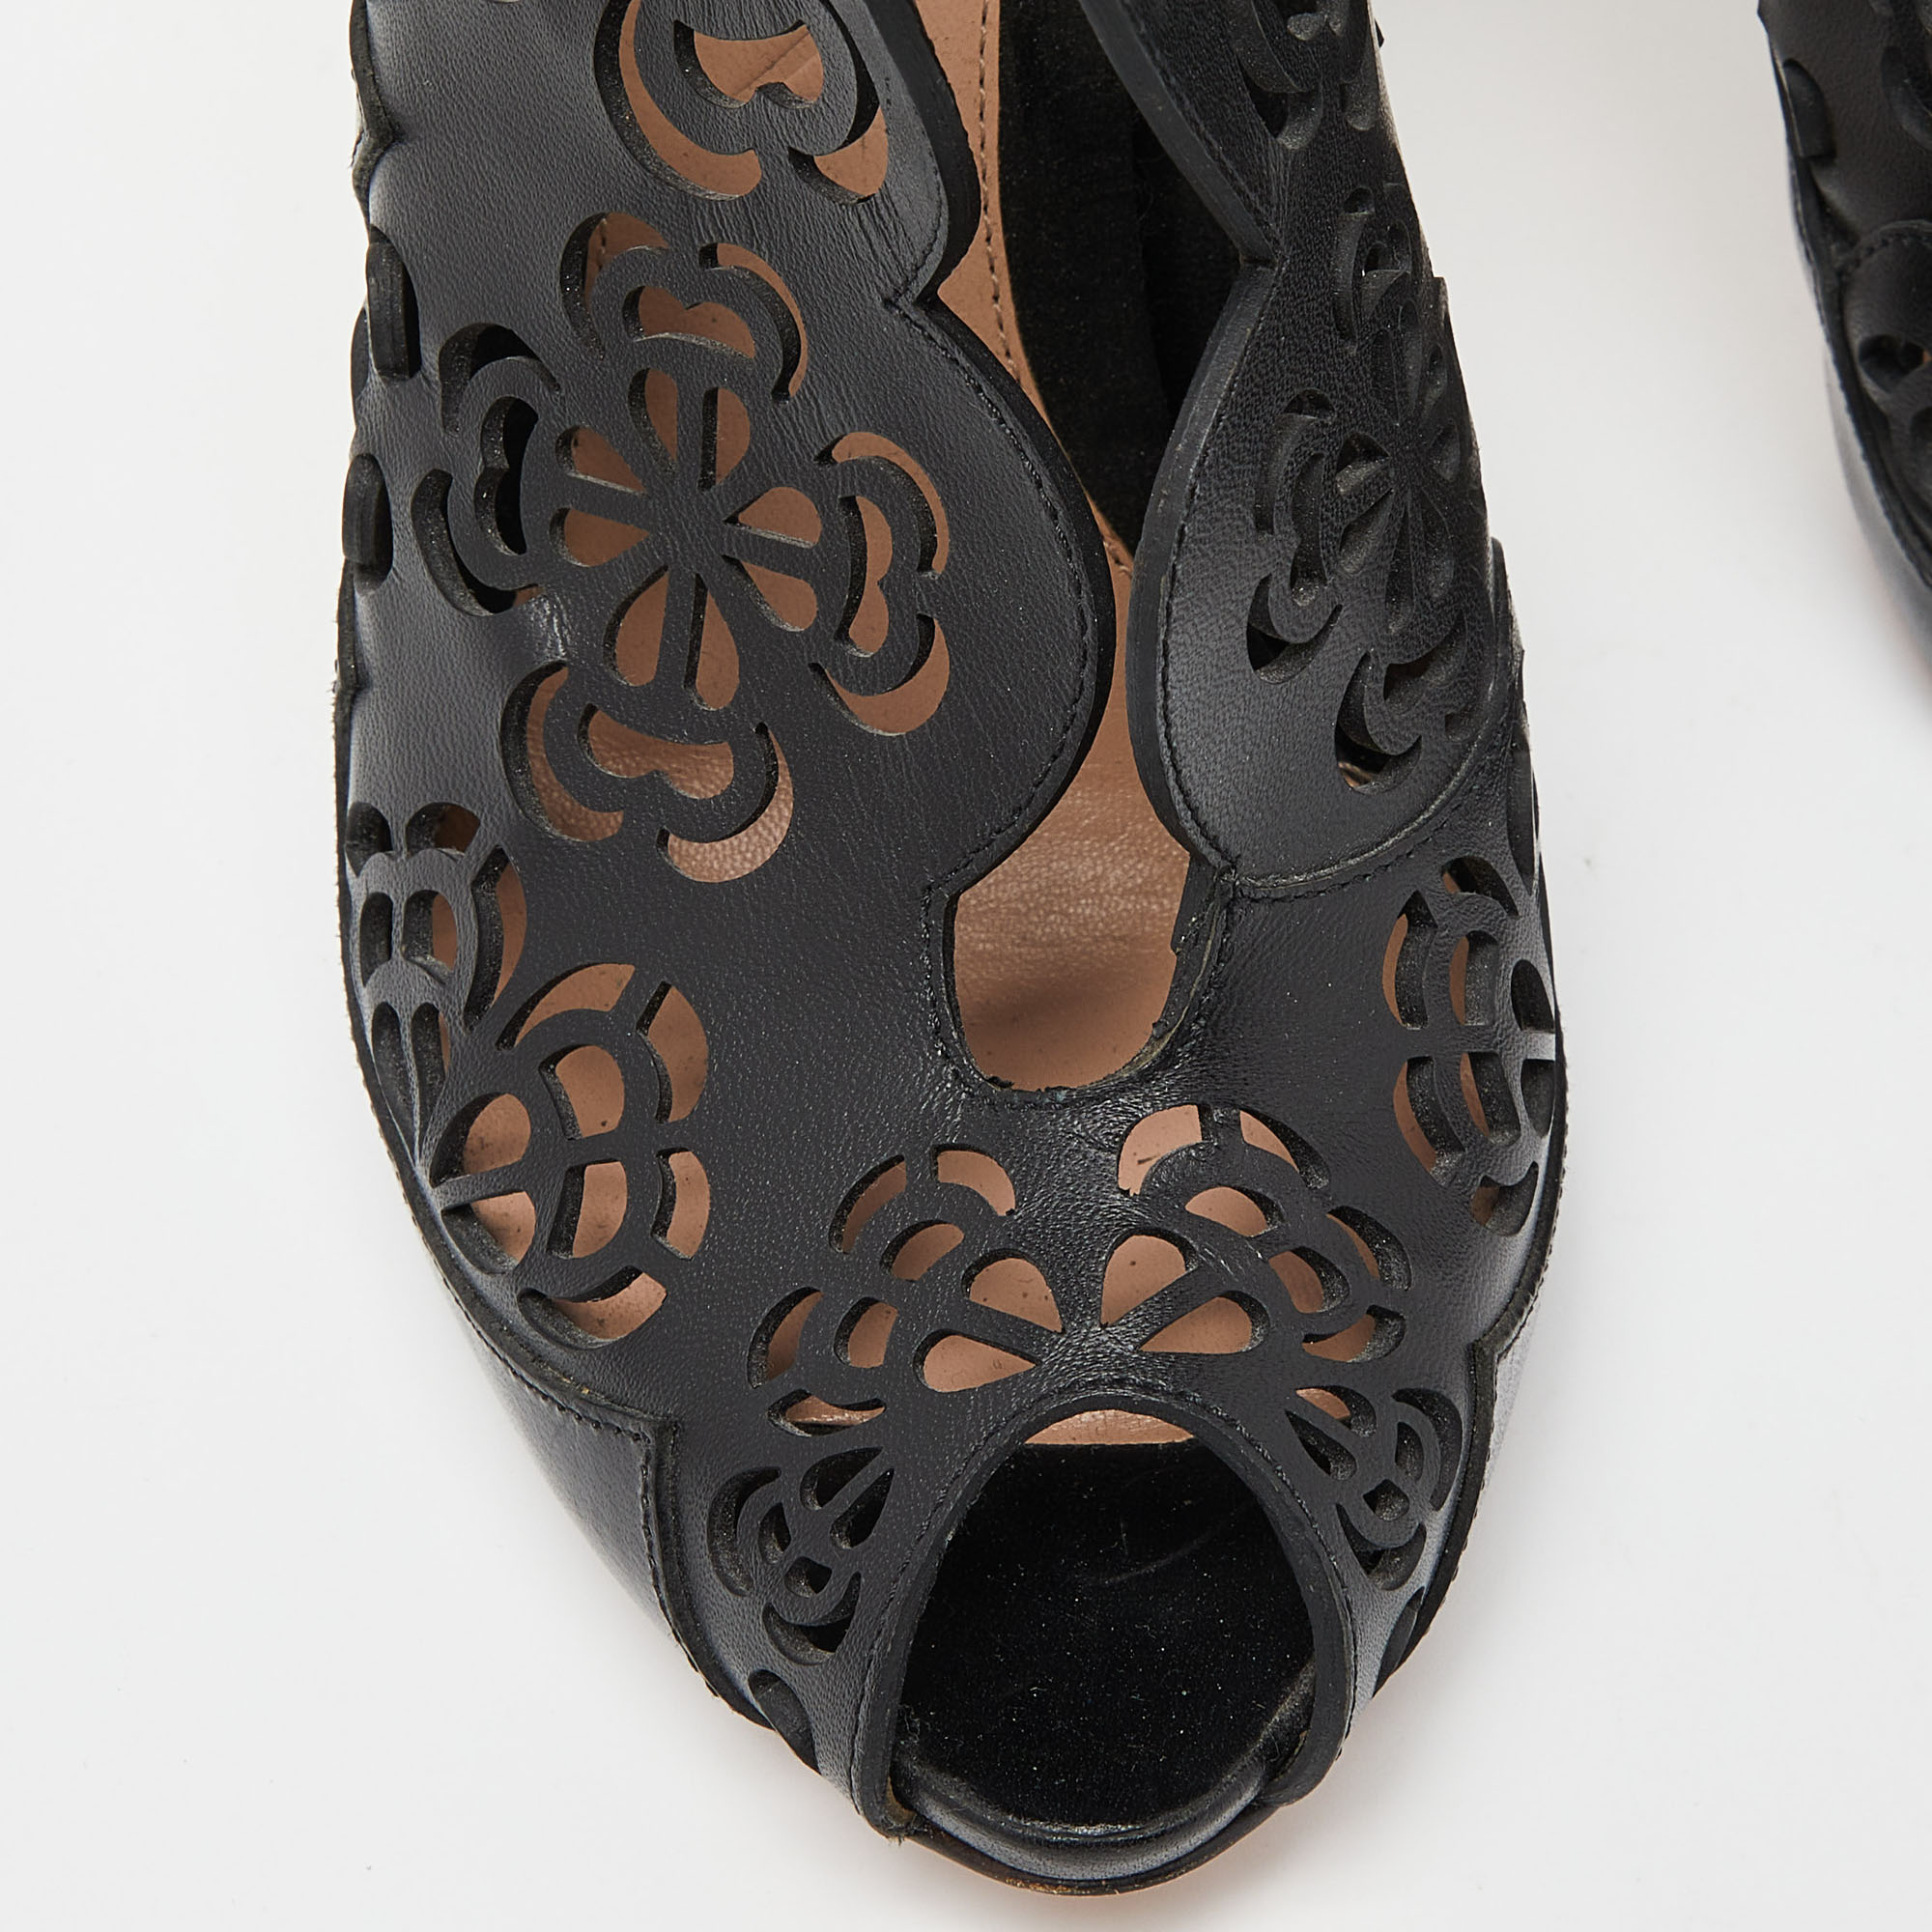 Alexander McQueen Black Laser Cut Leather Peep Toe Booties Size 36